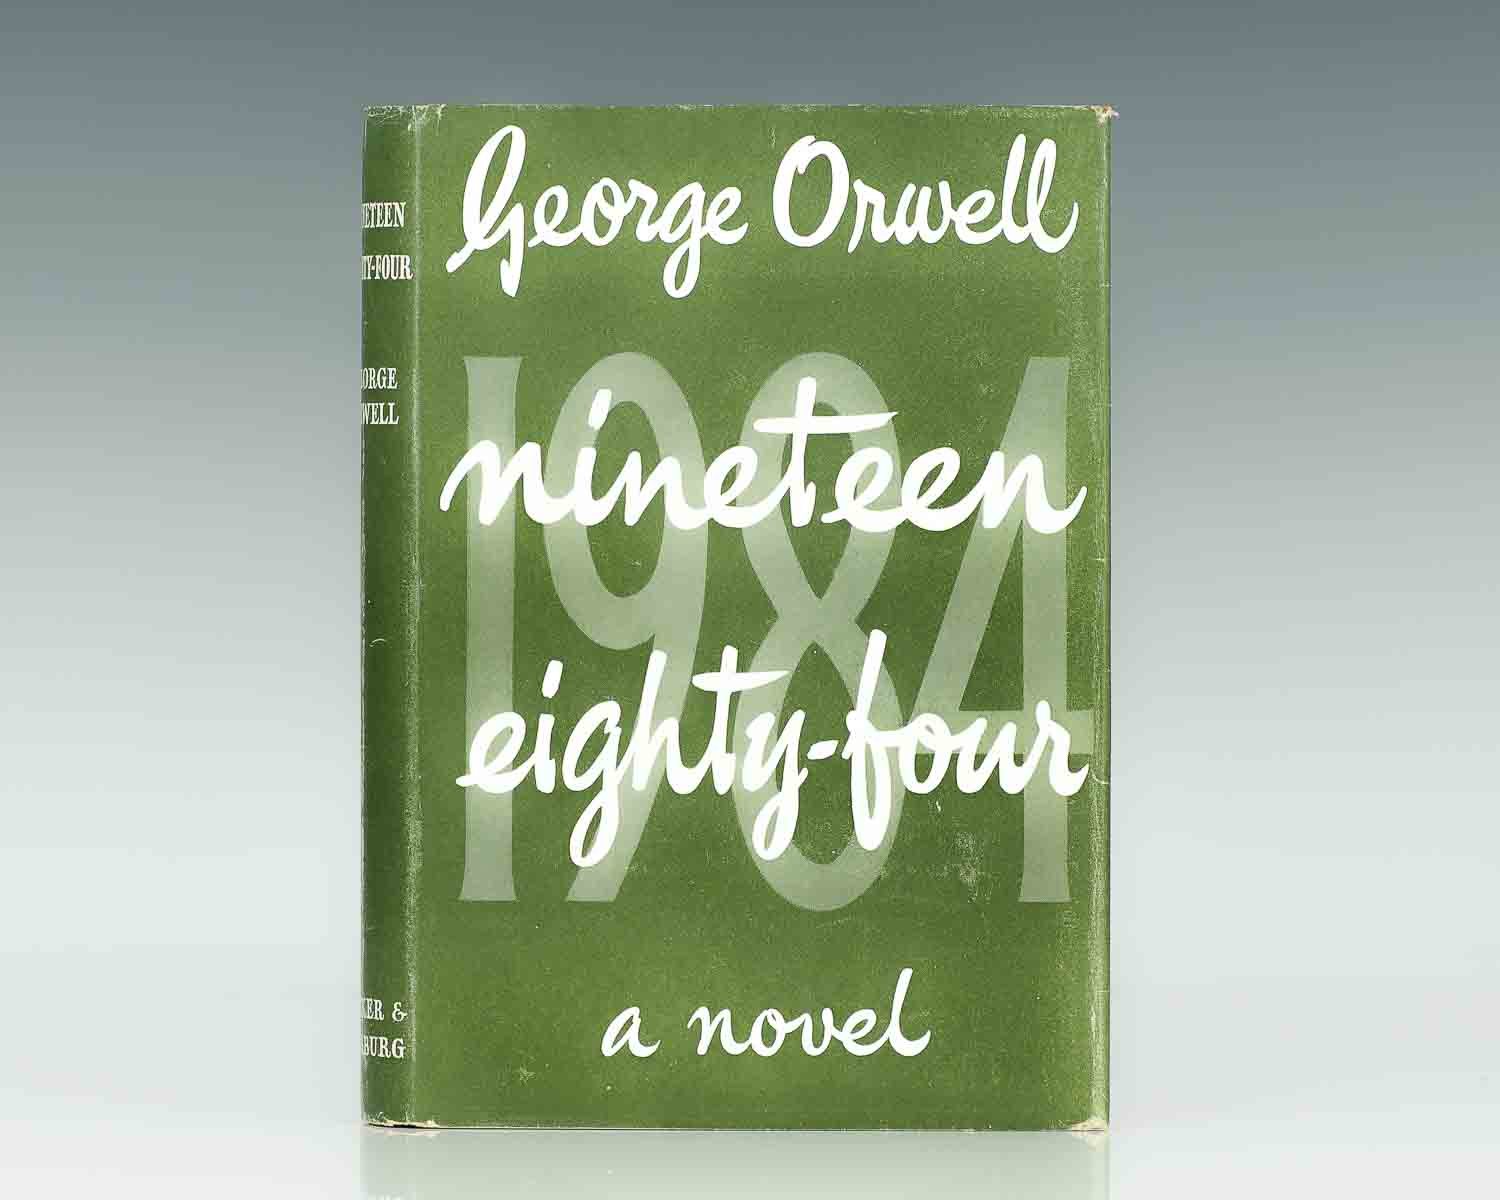 george orwell politics and the english language